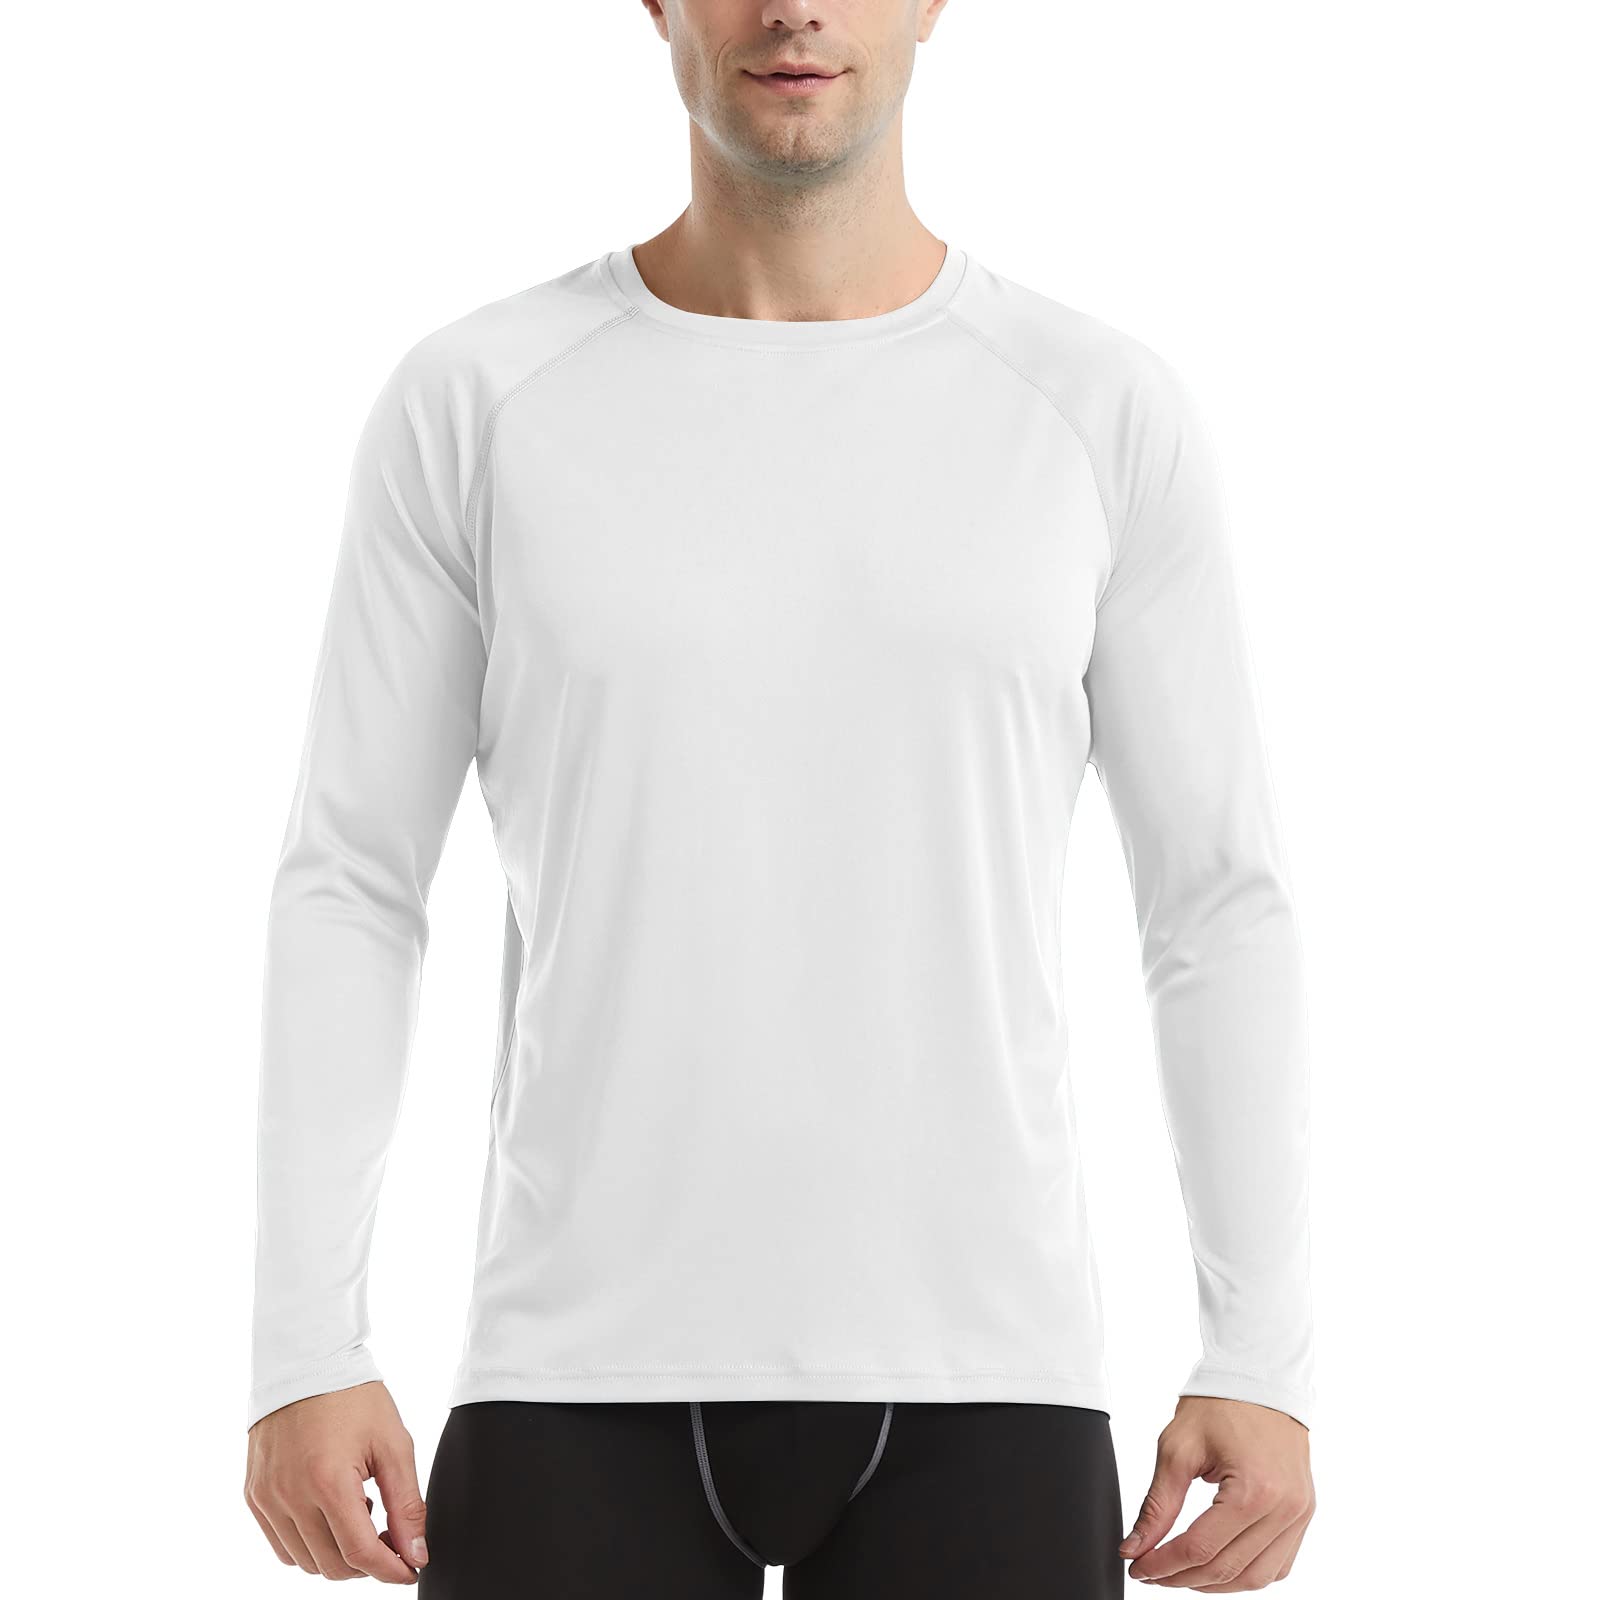 HISKYWIN Men's Long Sleeve Shirts Lightweight UPF 50+ Sun Protection SPF  Outdoor T-Shirts Fishing Hiking Running Tee Tops